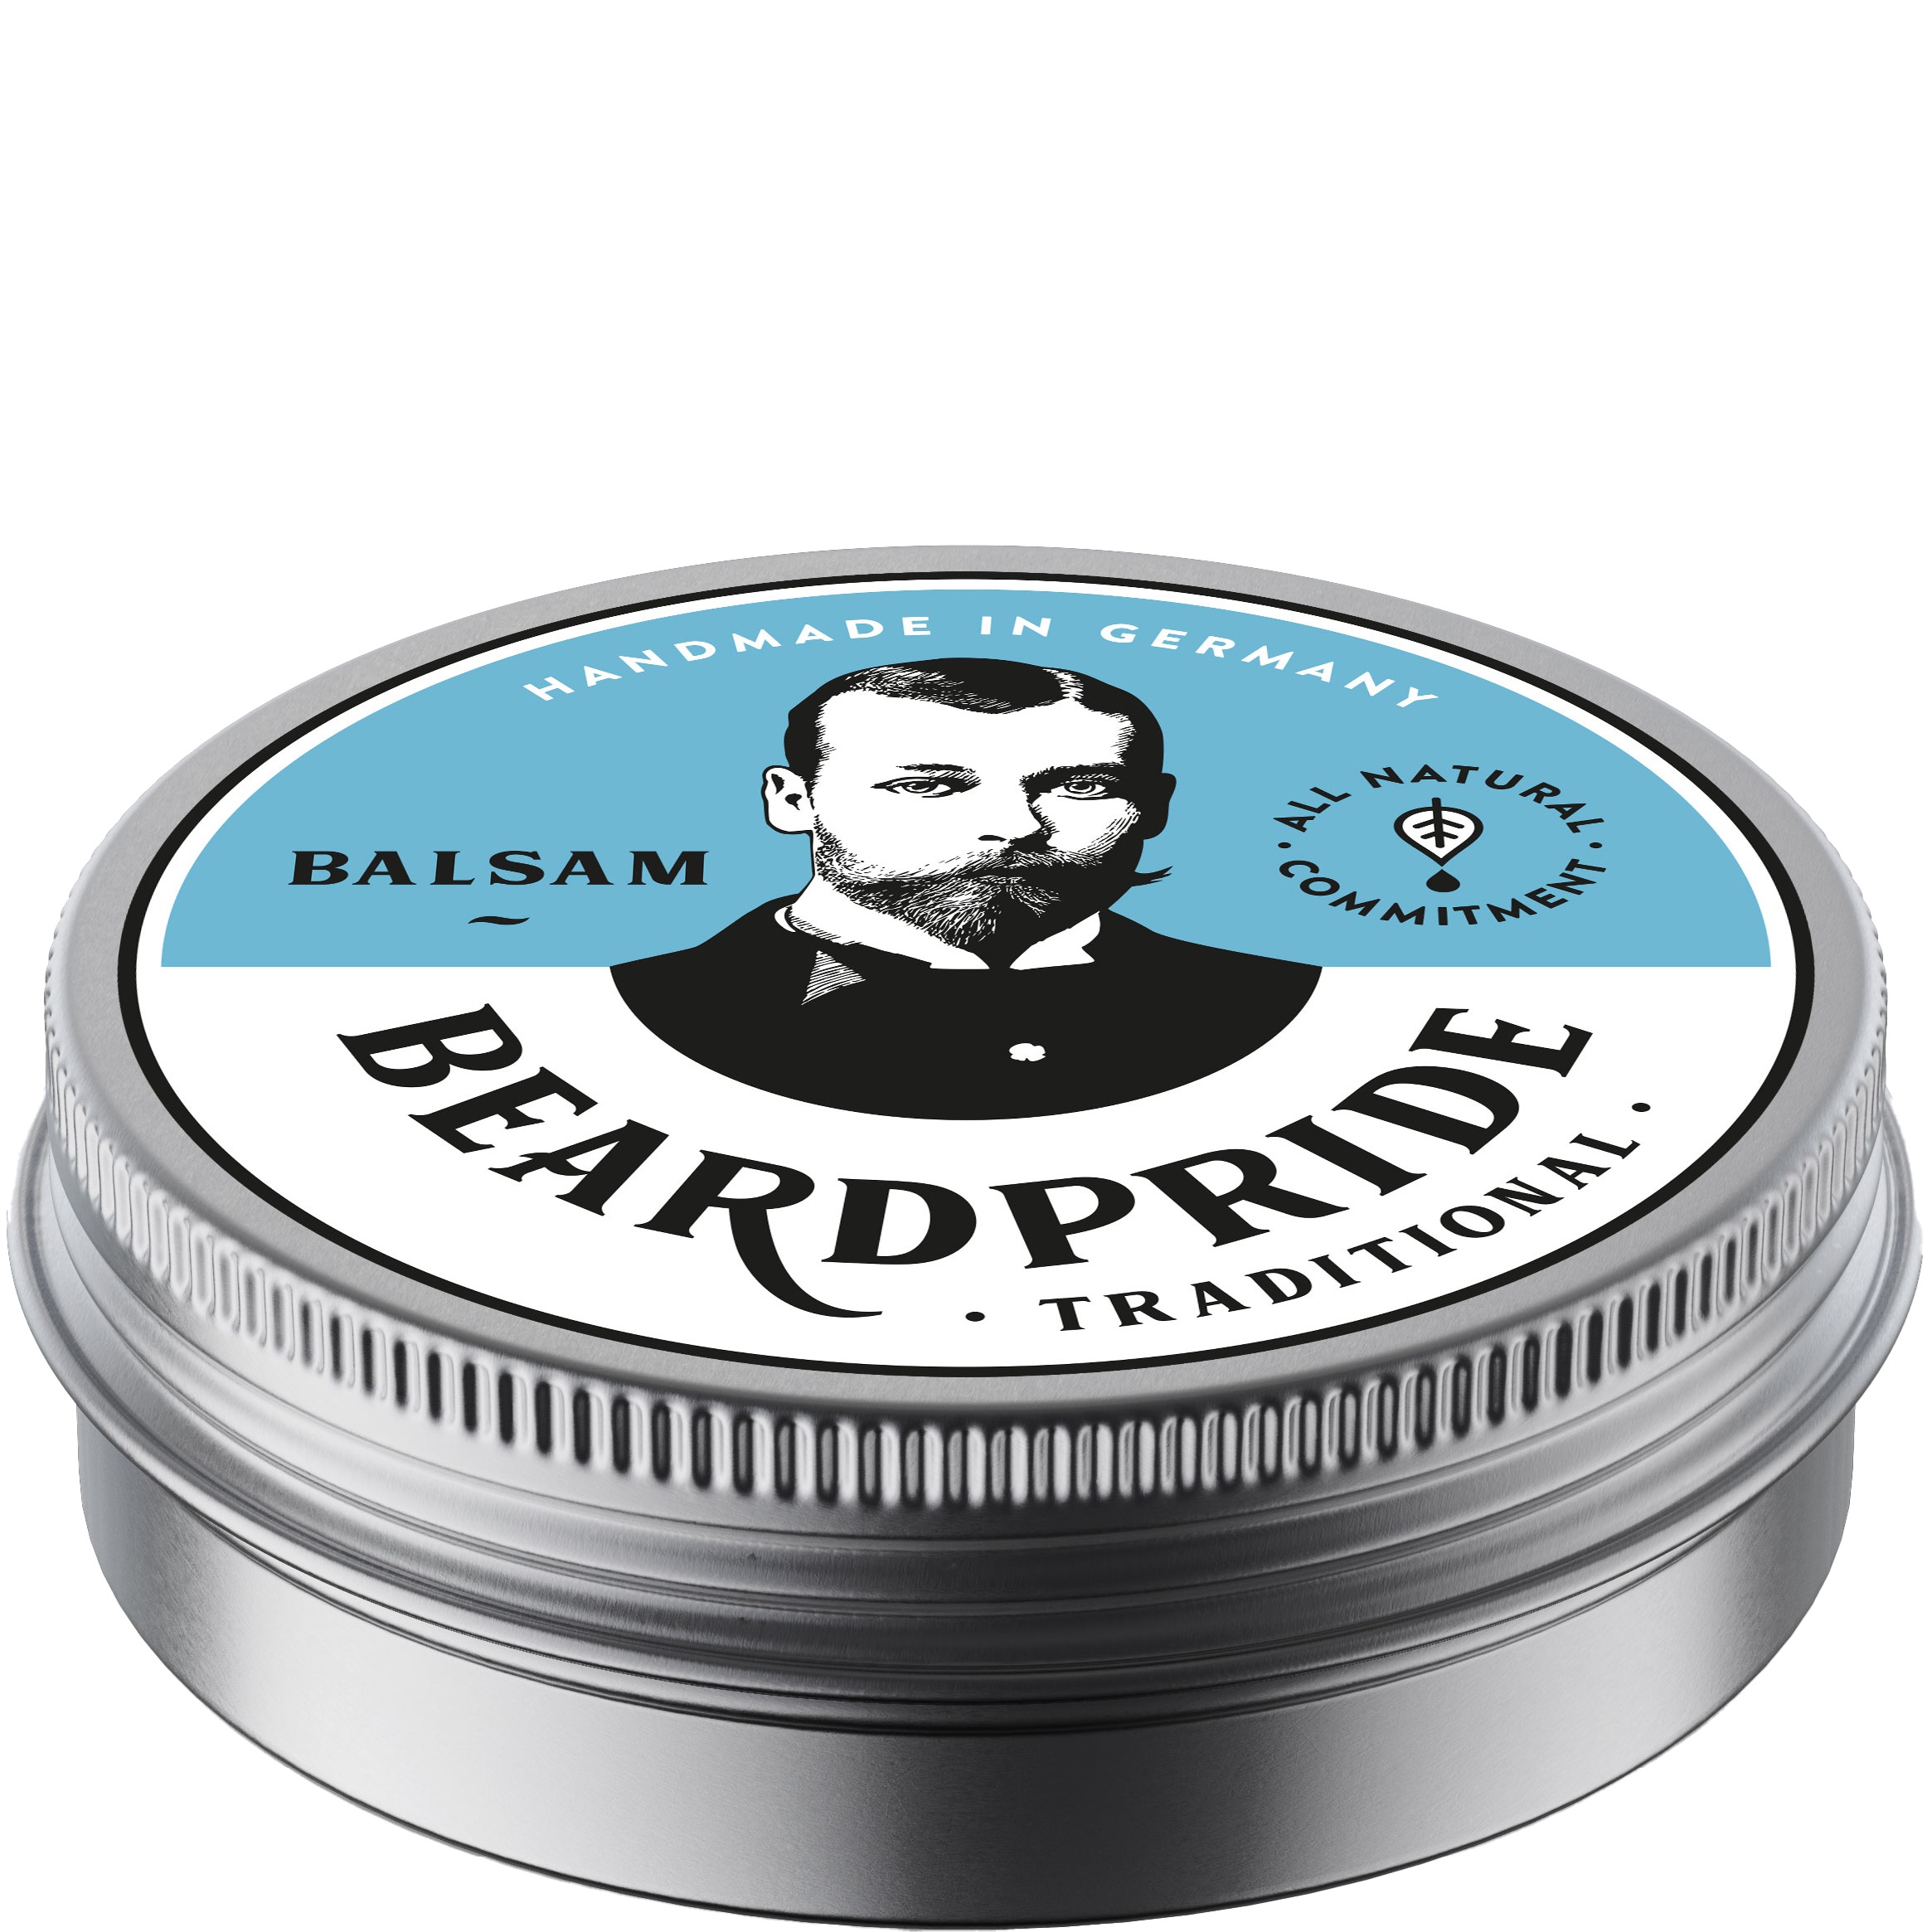 Beardpride Balsam Traditional 55 gram - 1.1 - BP-310300